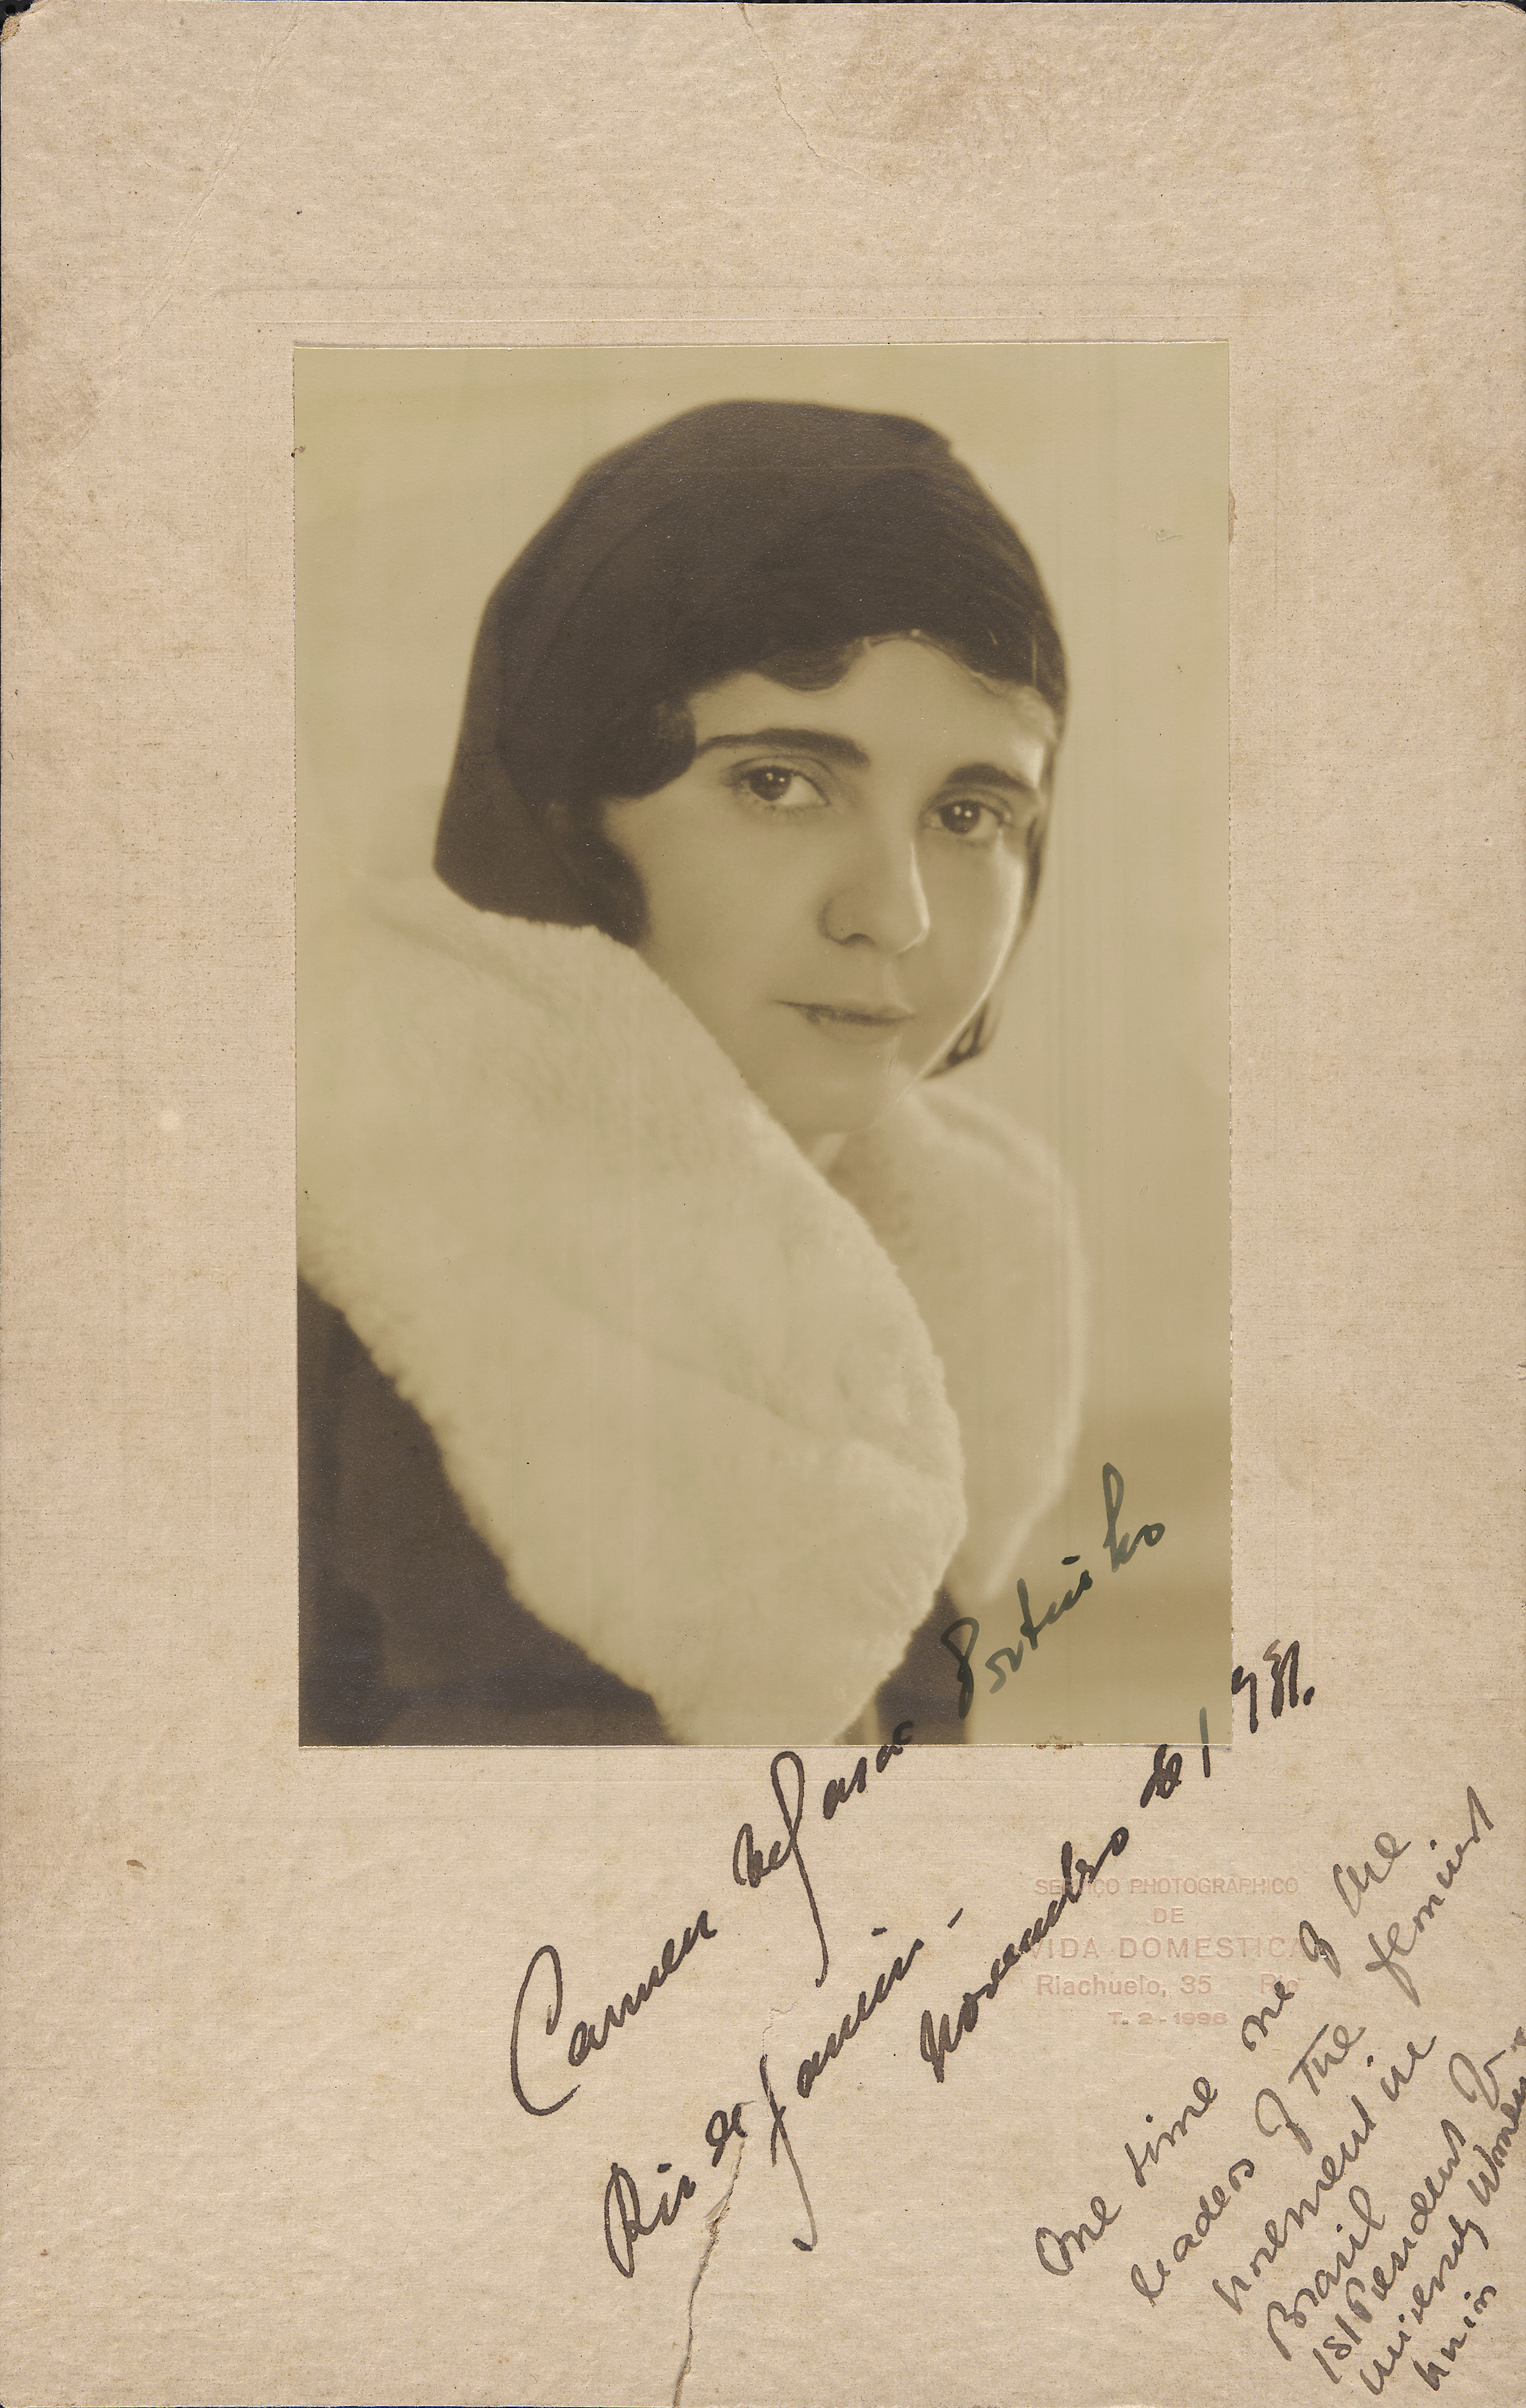 Cândido Portinari, Portrait of Mrs. John D. Rockefeller, Jr. (1949)